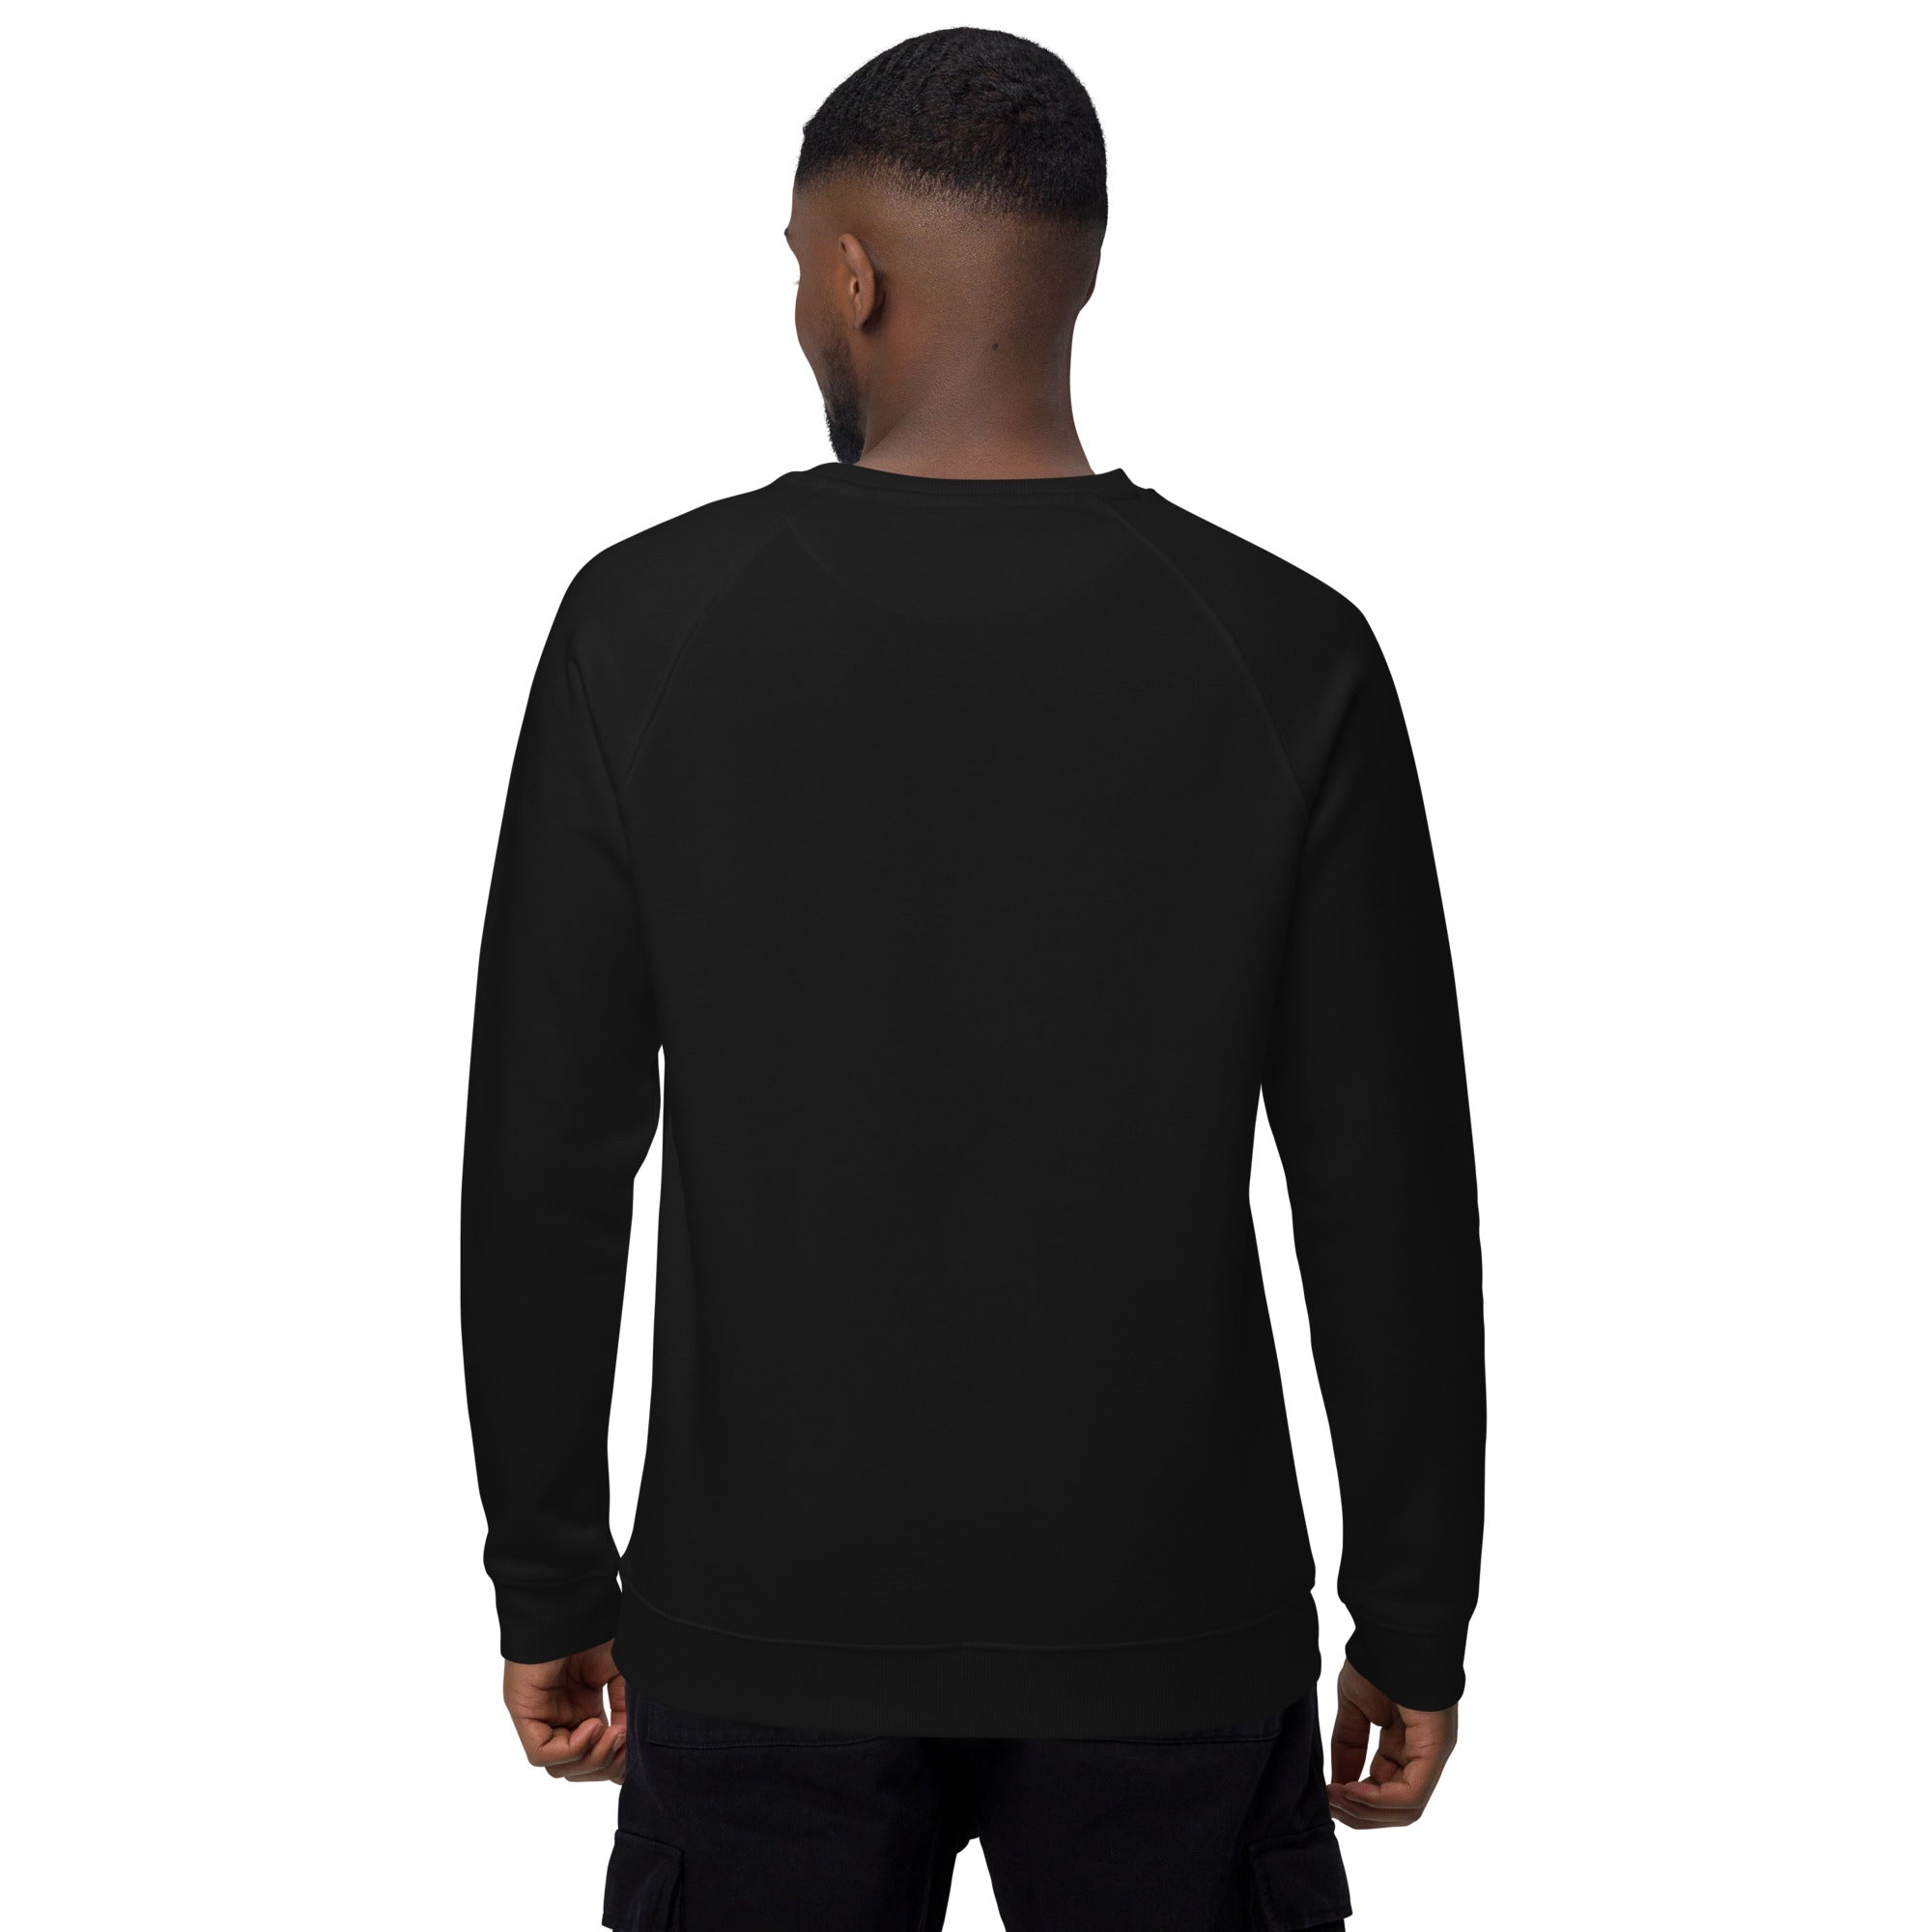 Montgomeryville Logo W - Black Unisex organic raglan sweatshirt